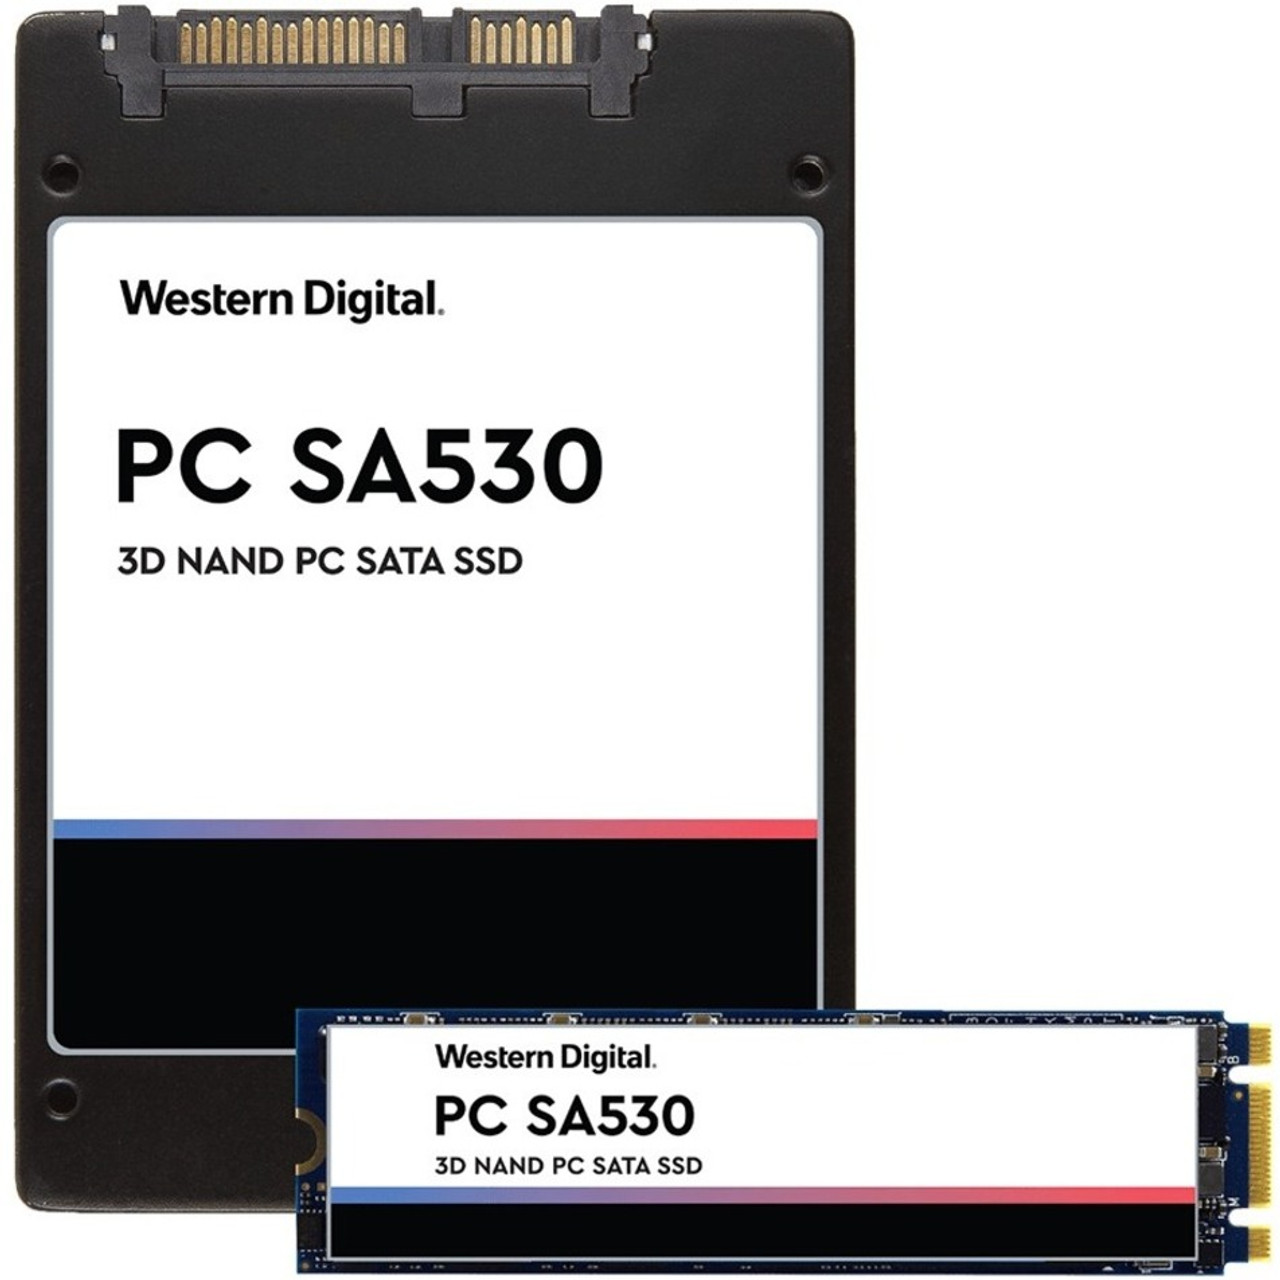 Western Digital PC SA530 256 GB Solid State Drive - 2.5" Internal - SATA